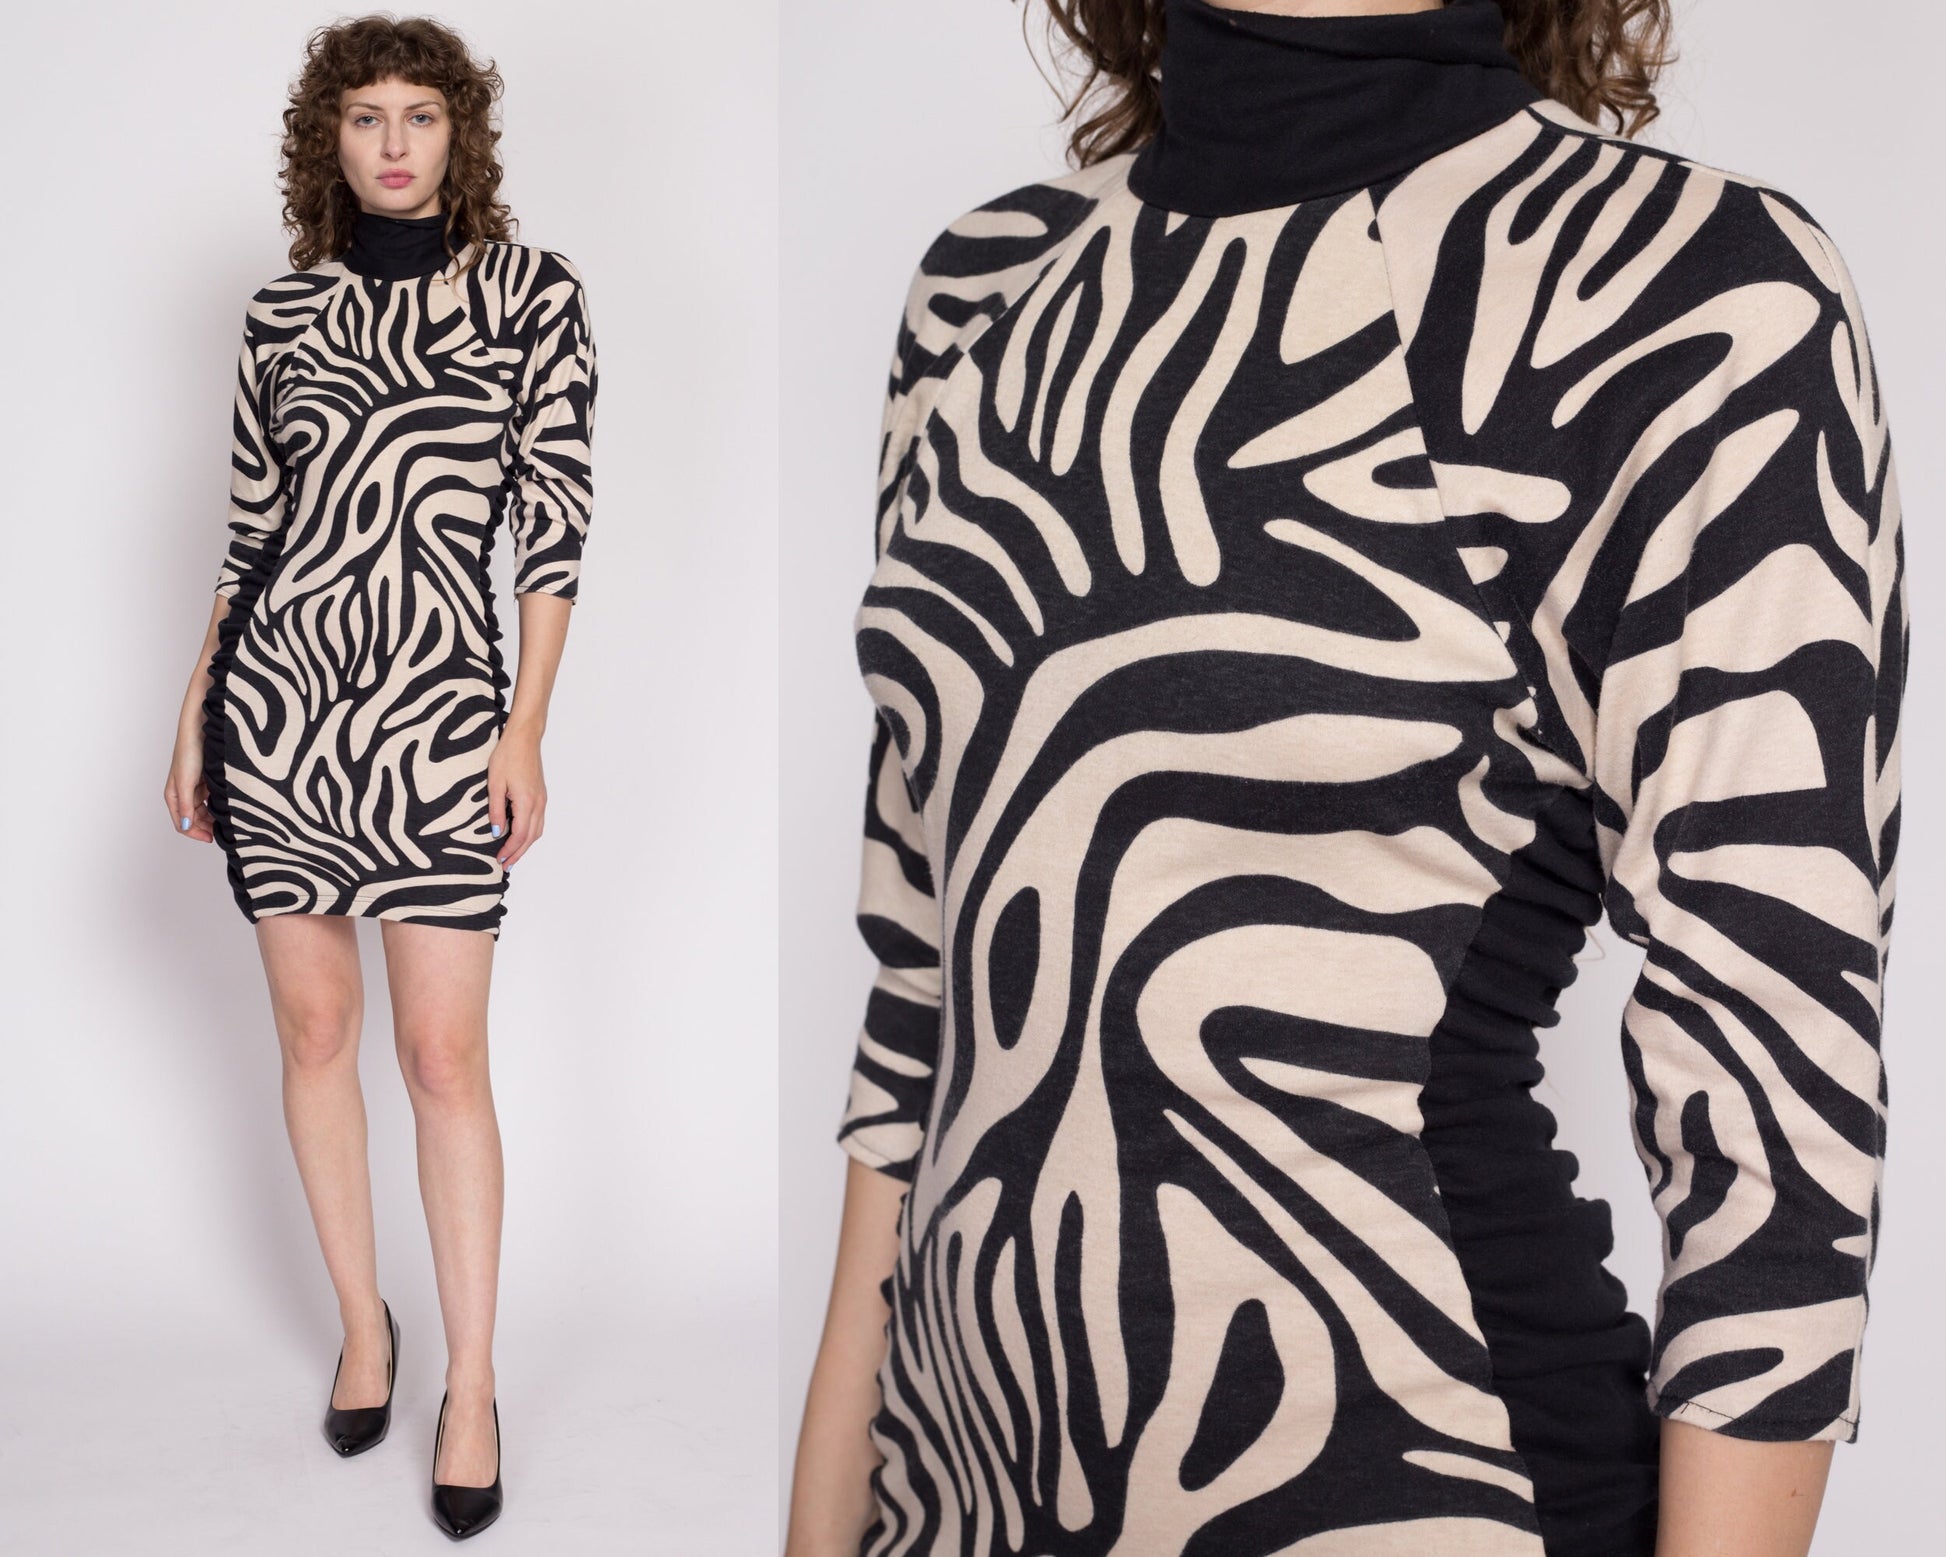 Medium 80s Zebra Stripe Bodycon Turtleneck Dress | Vintage Abstract Animal Print Ruched Fitted Mini Dress